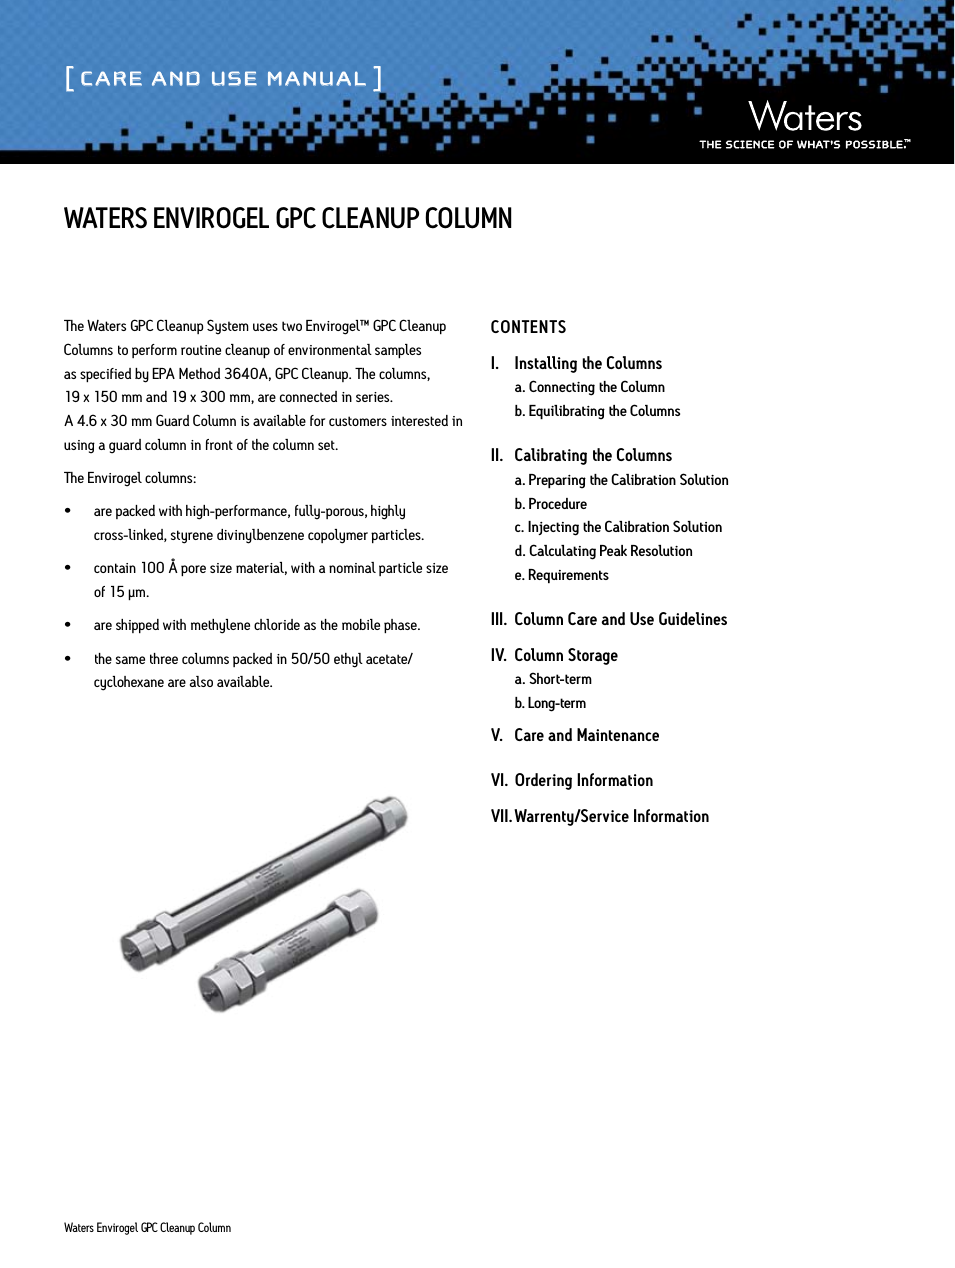 Envirogel GPC Cleanup Column